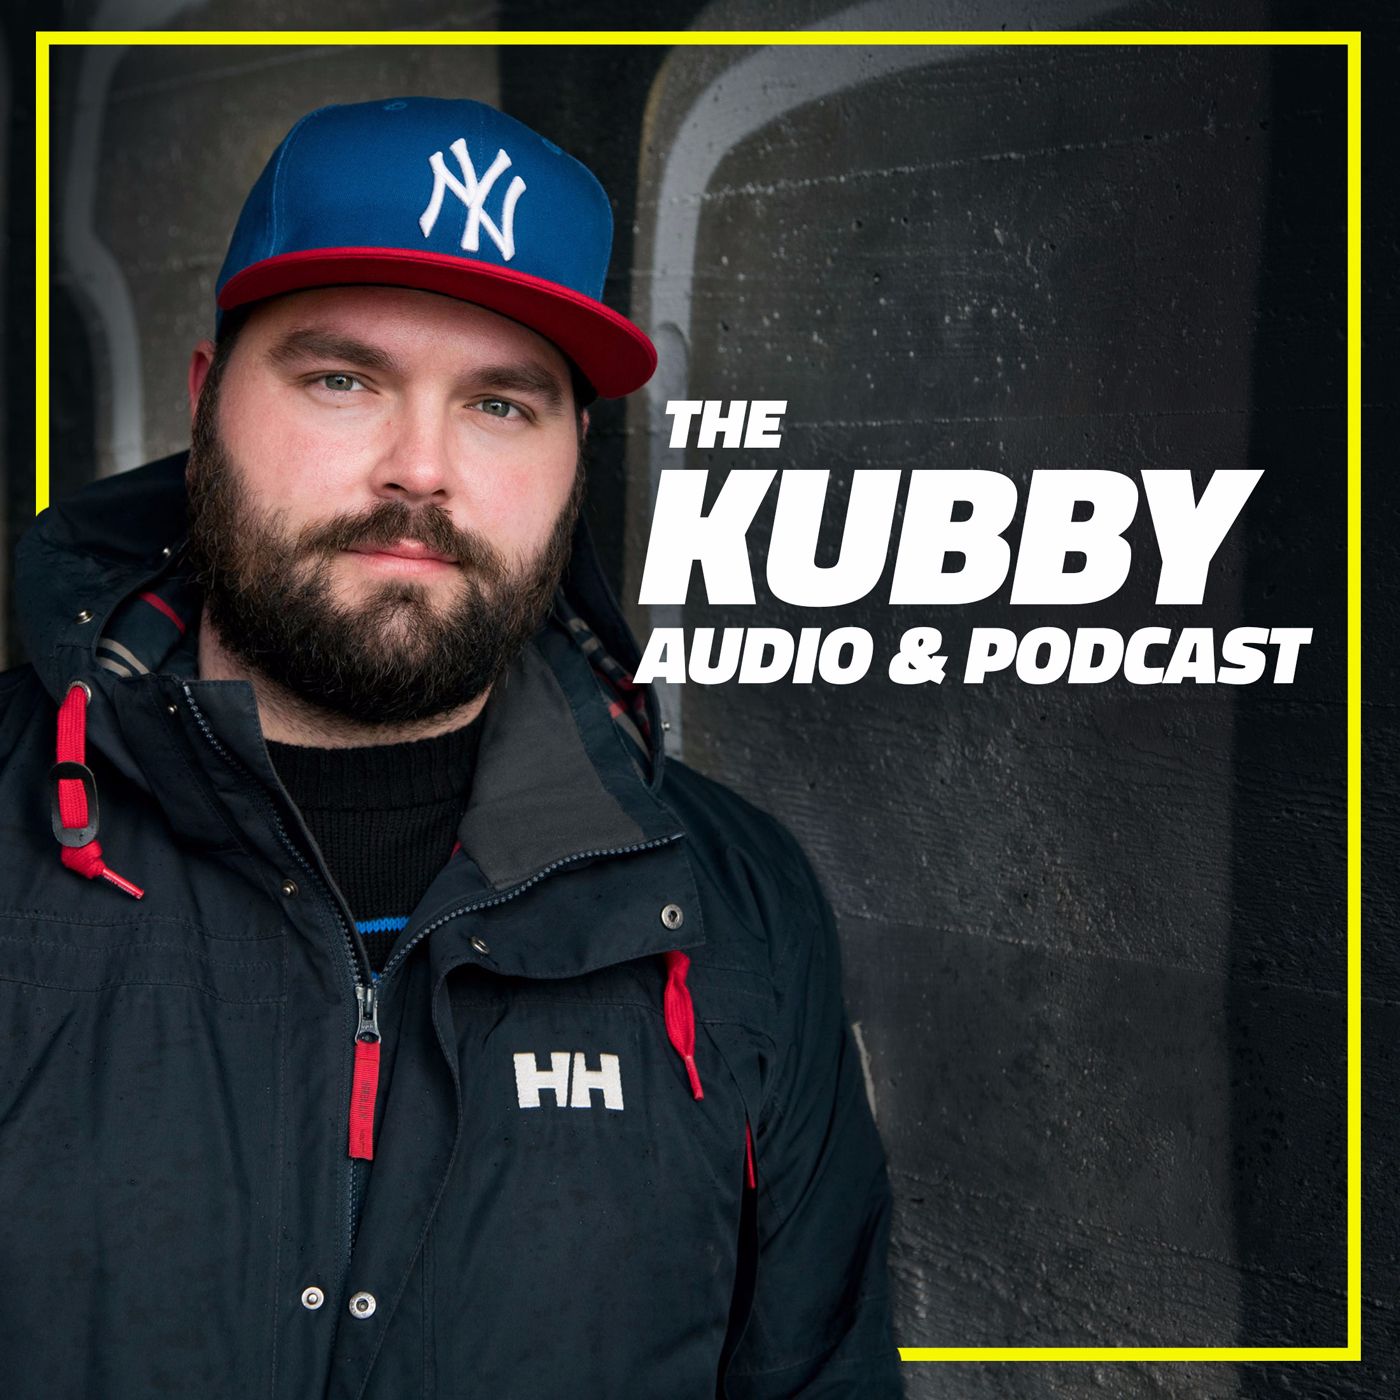 The Kubby - Podcast & Audio